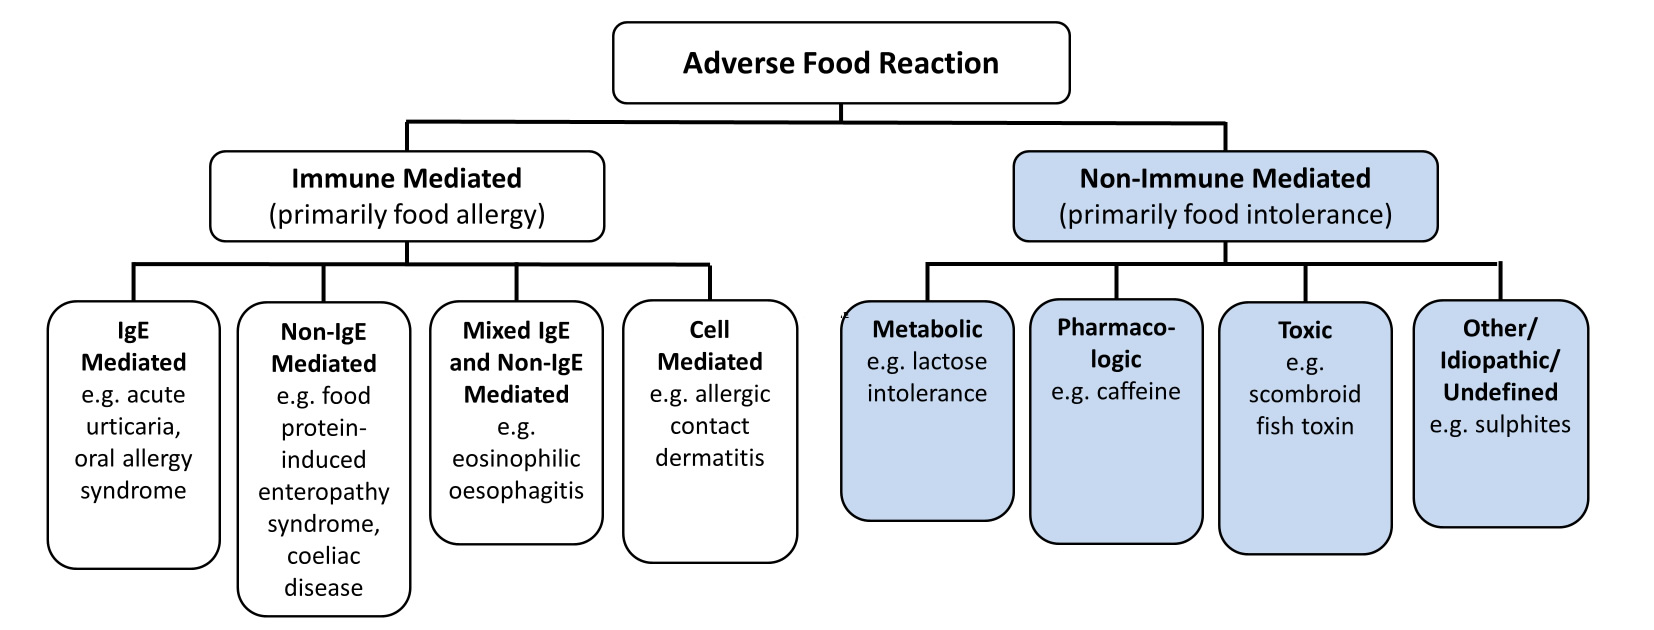 Adverse food reaction